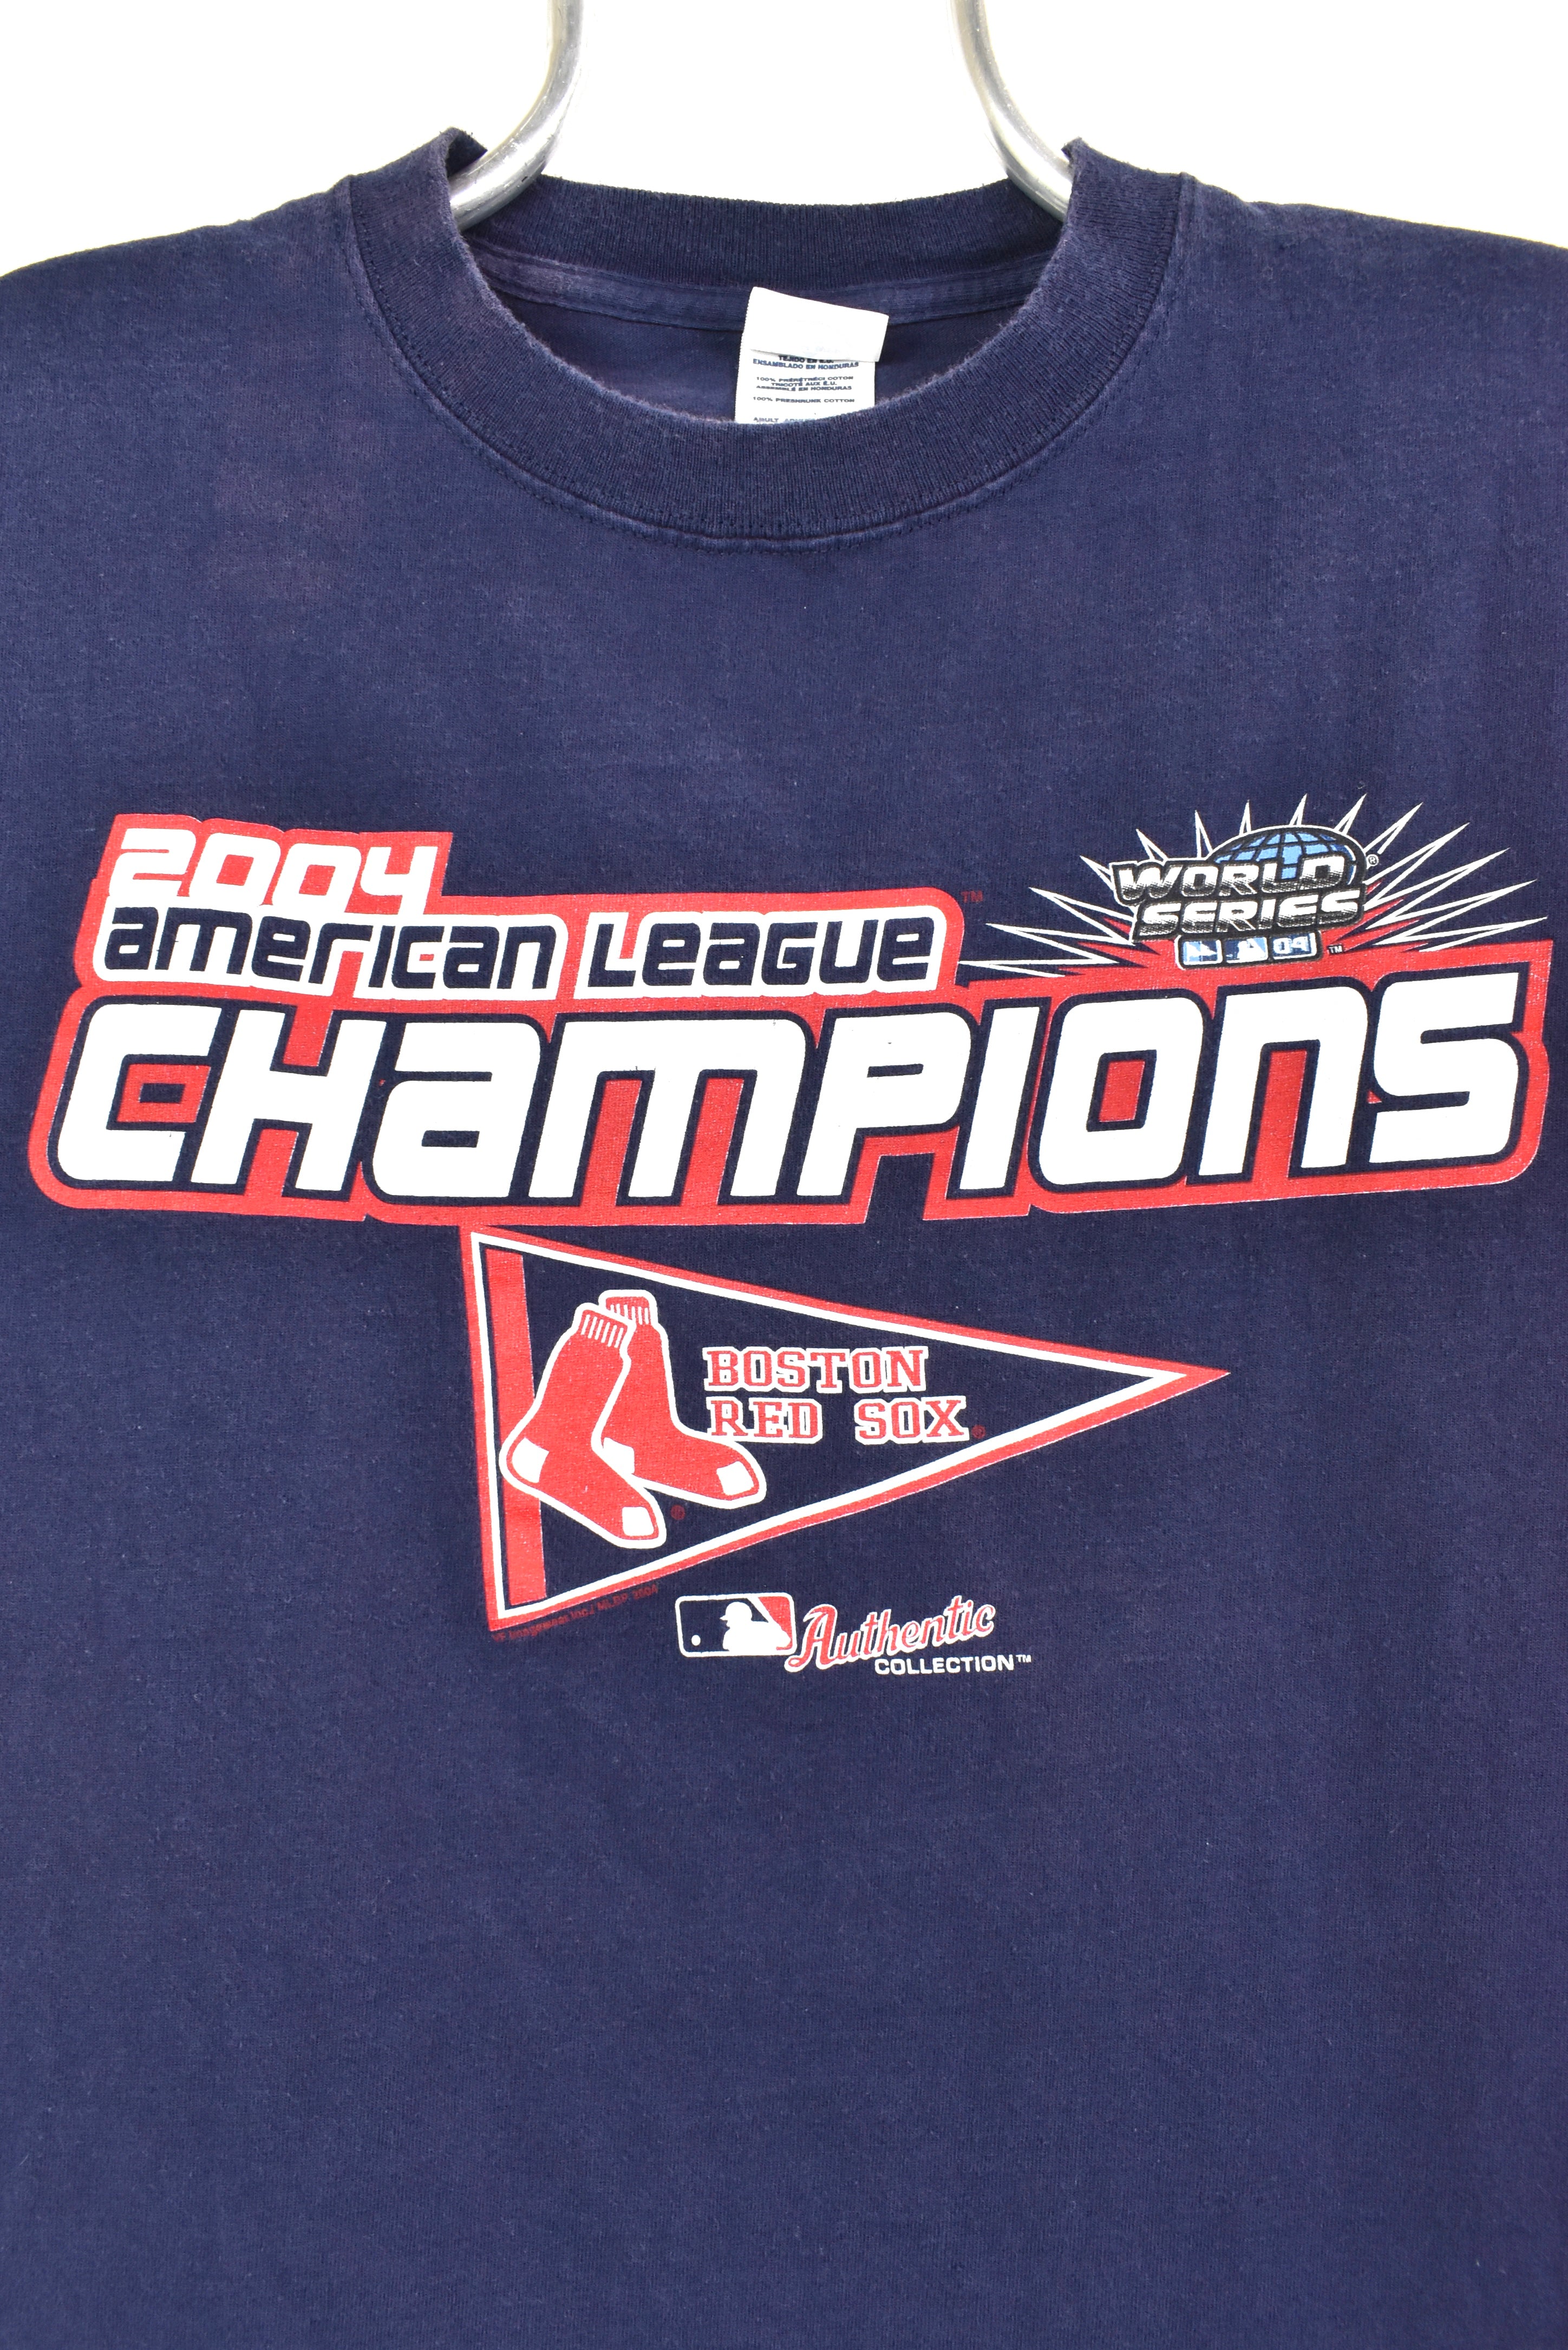 Vintage Boston Red Sox shirt, MLB World Series graphic tee - large, navy blue PRO SPORT